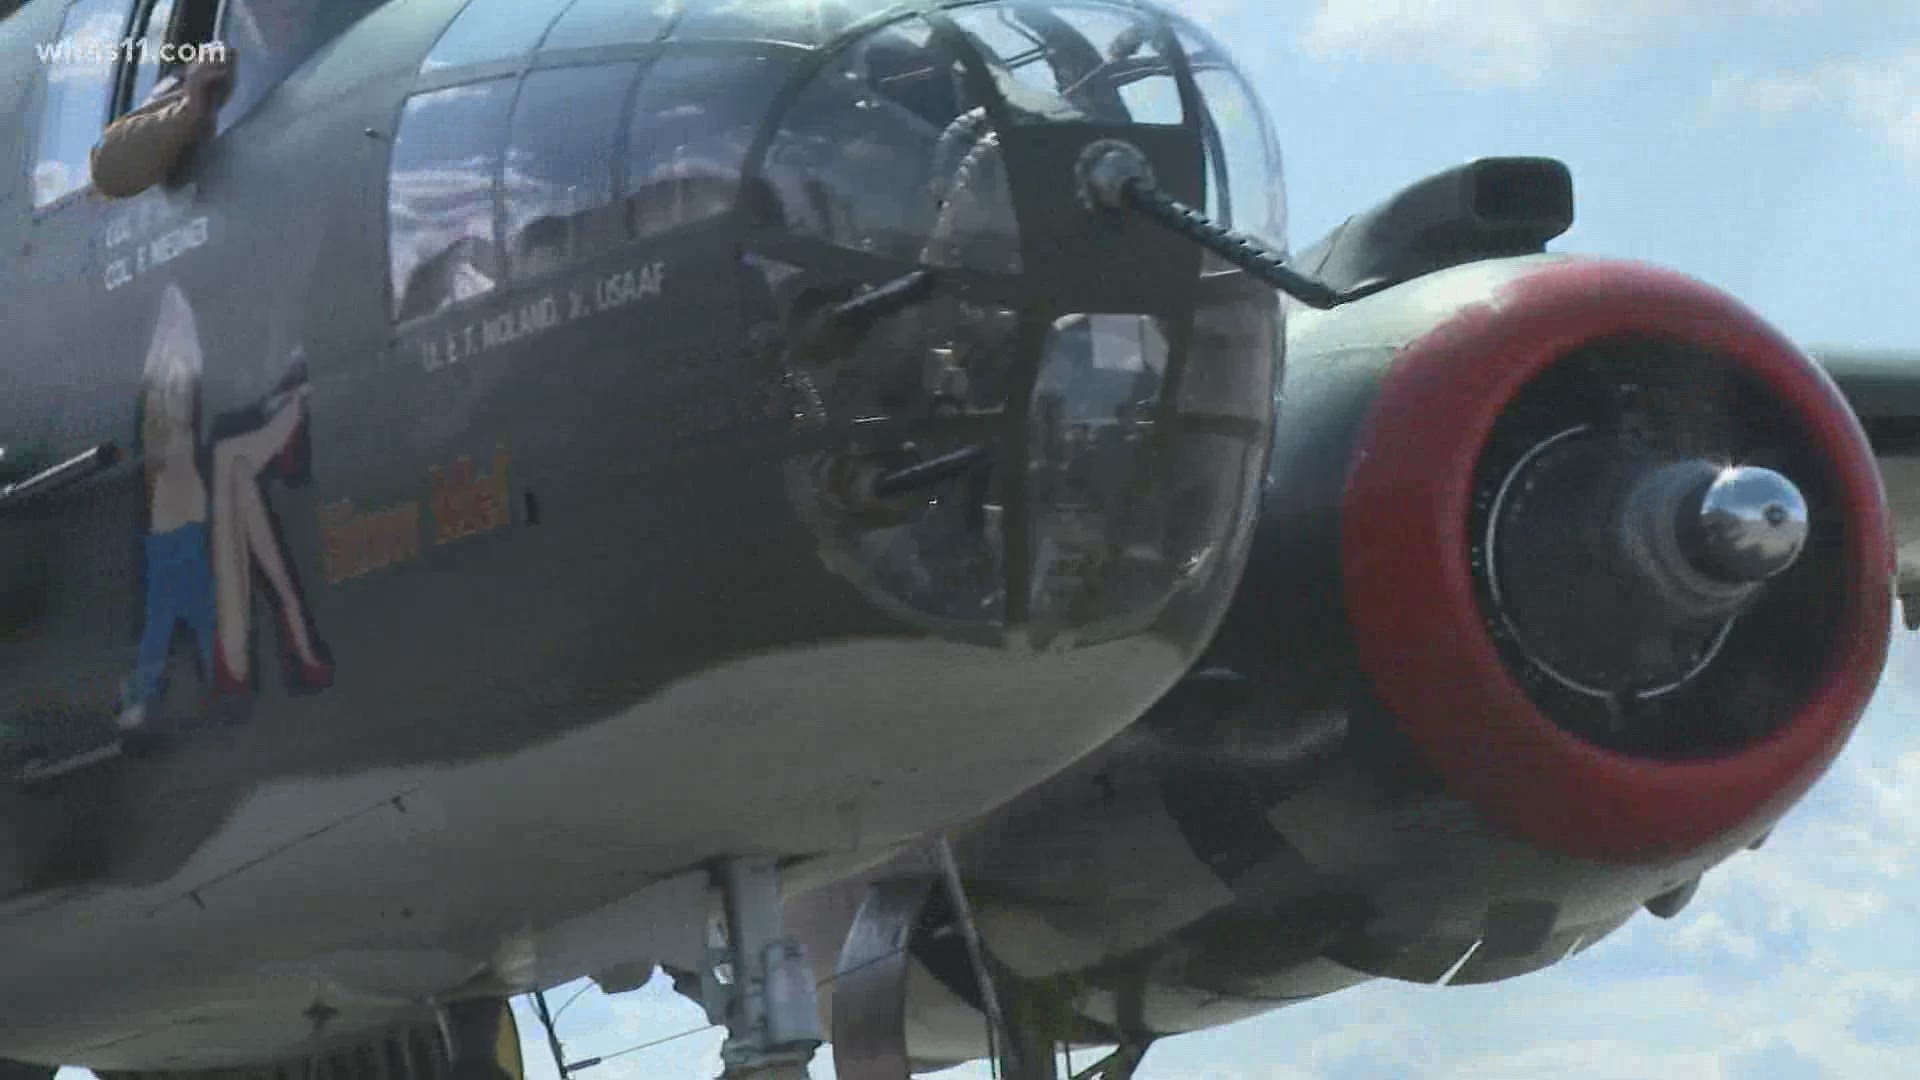 Ten WWII veterans got to experience the flight courtesy of Honor Flight Bluegrass.